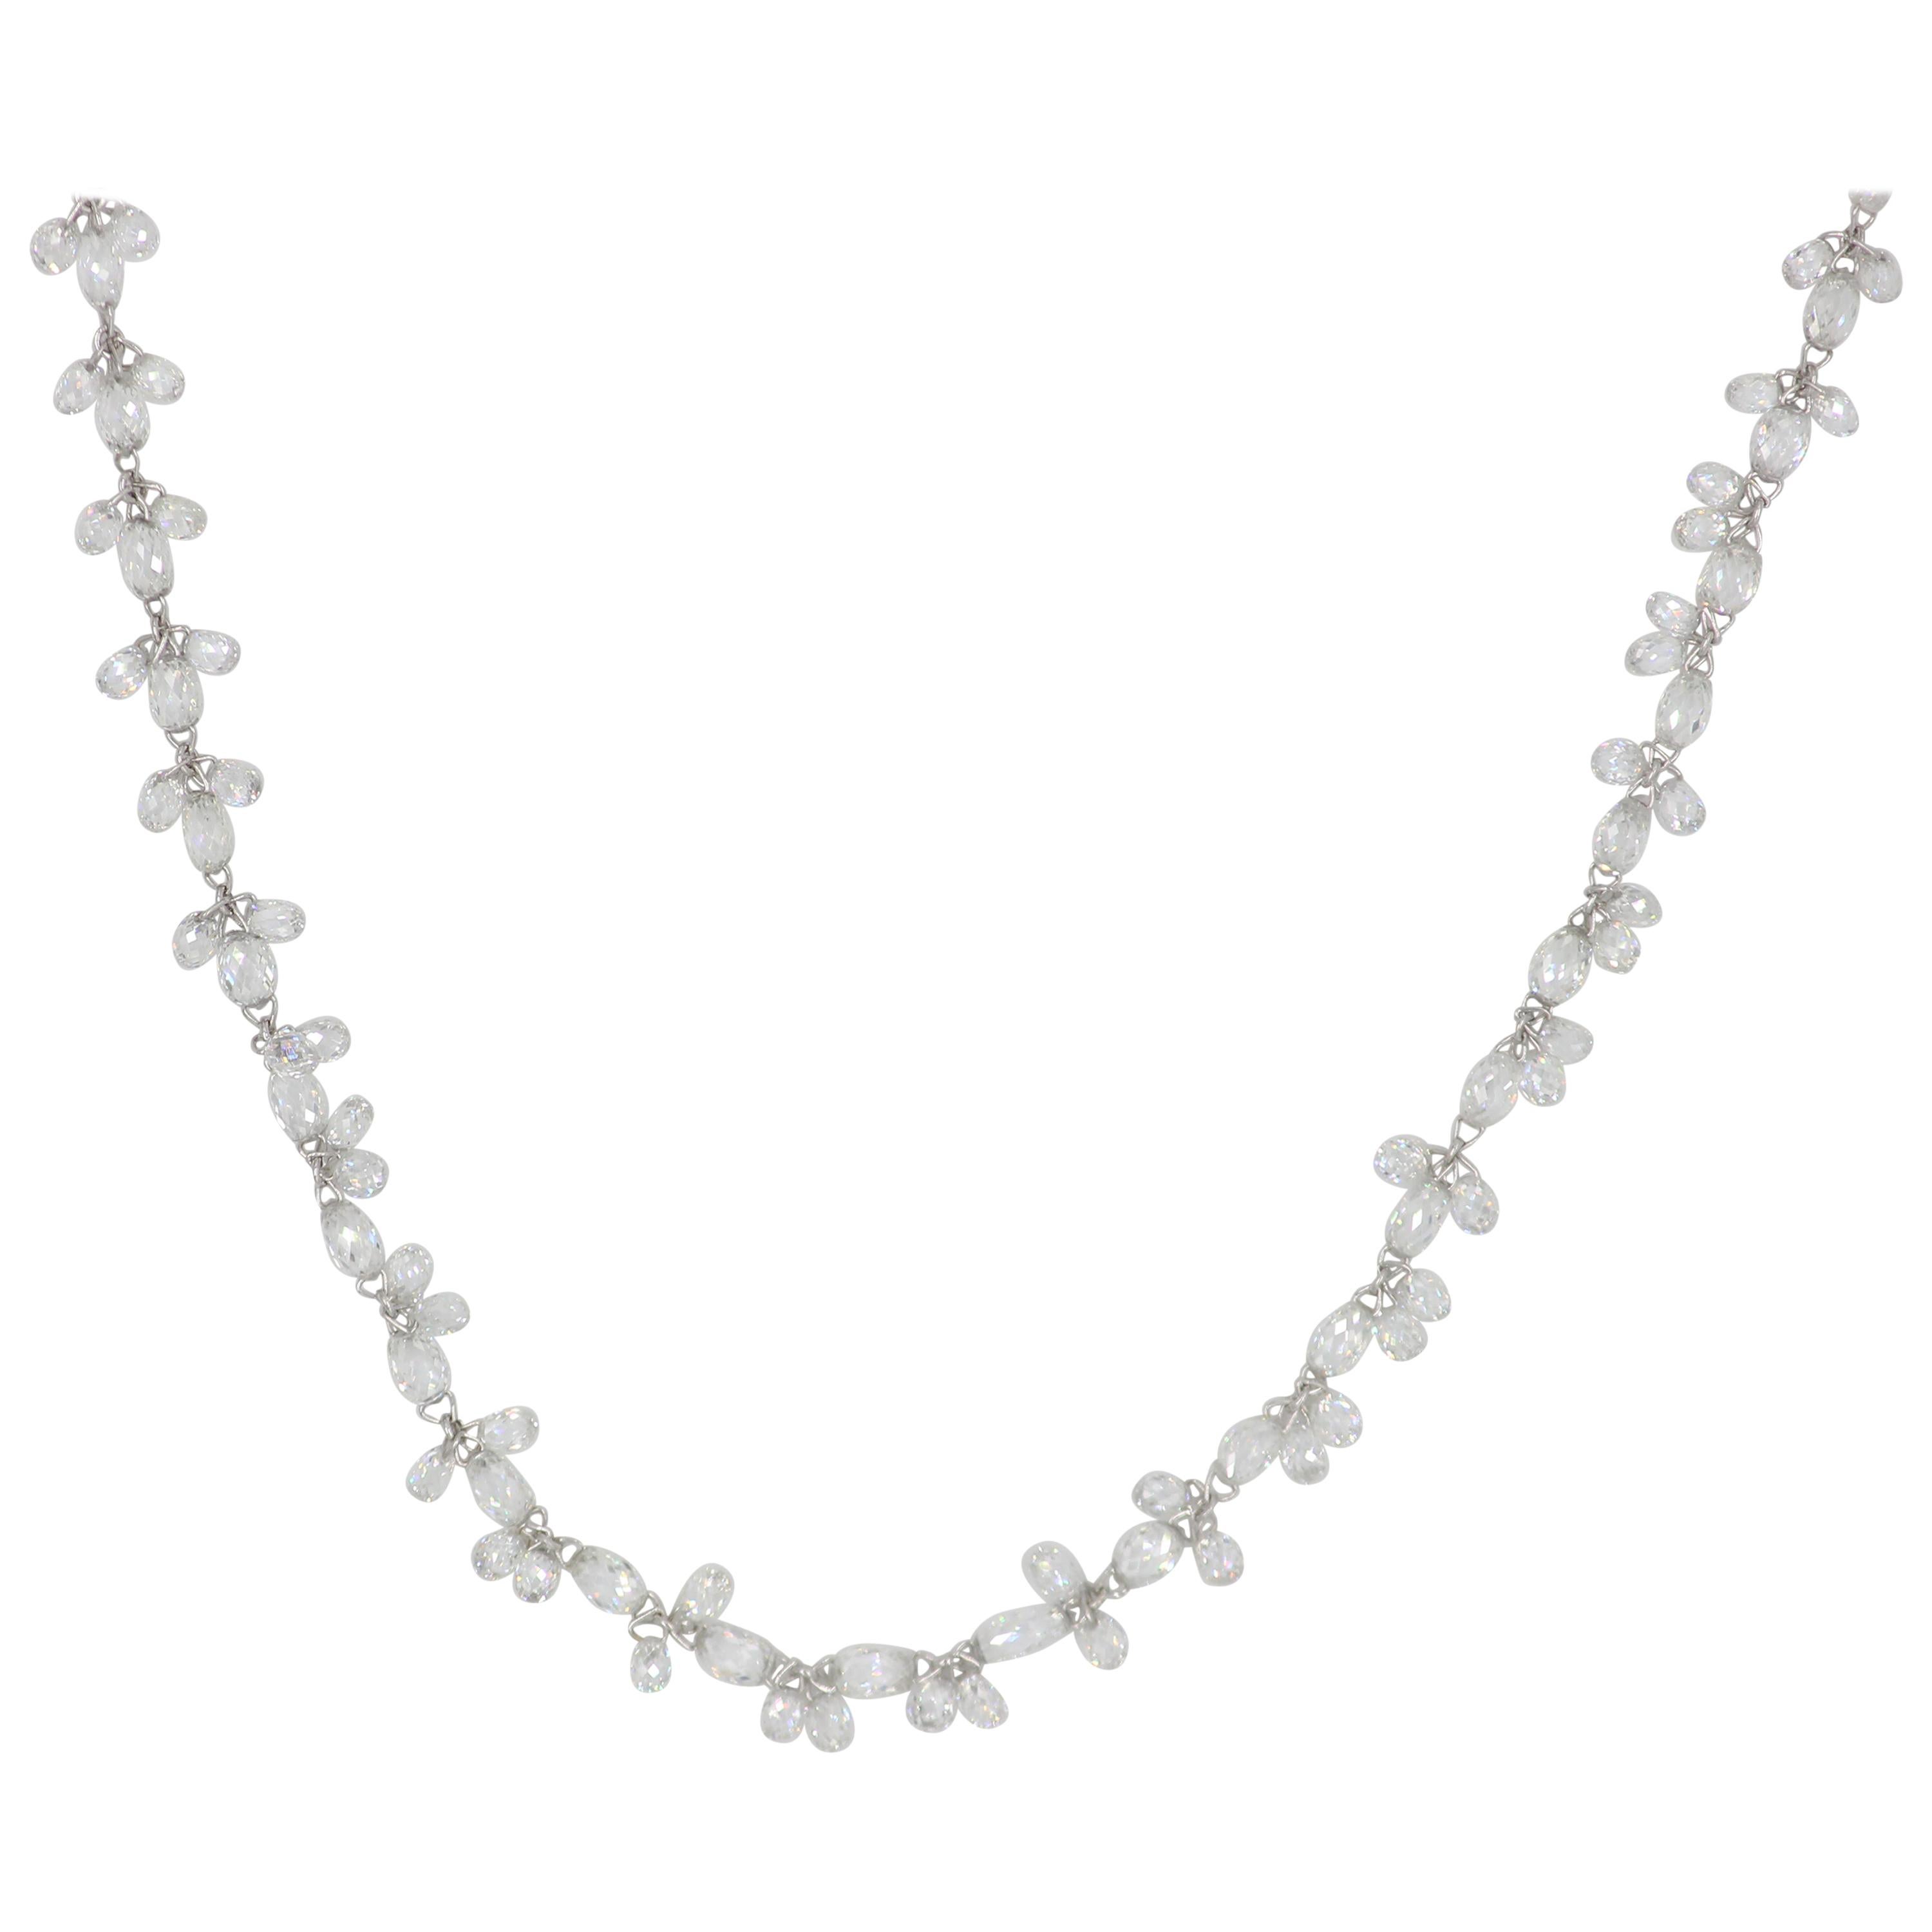 PANIM 26.45 Carat Floral Briolette Necklace in White Gold Necklace